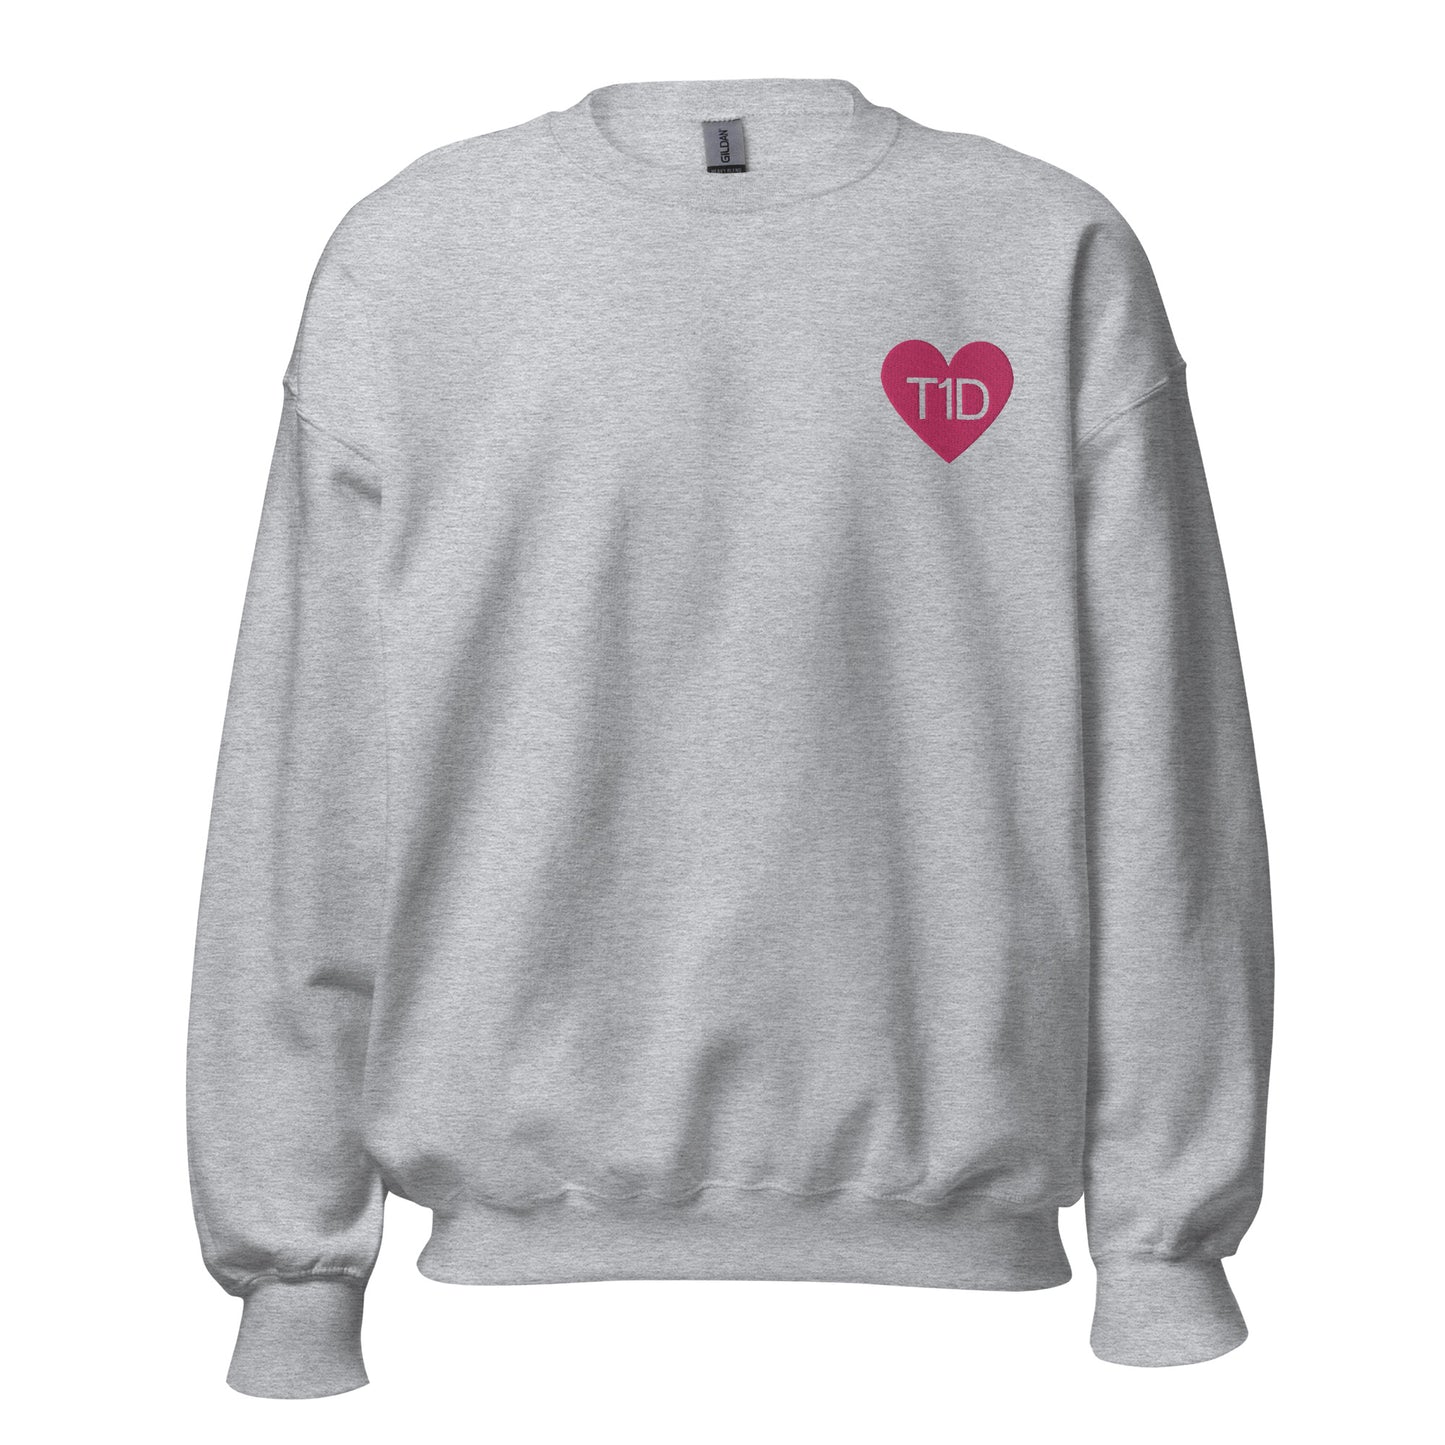 gray unisex sweater 'T1D'